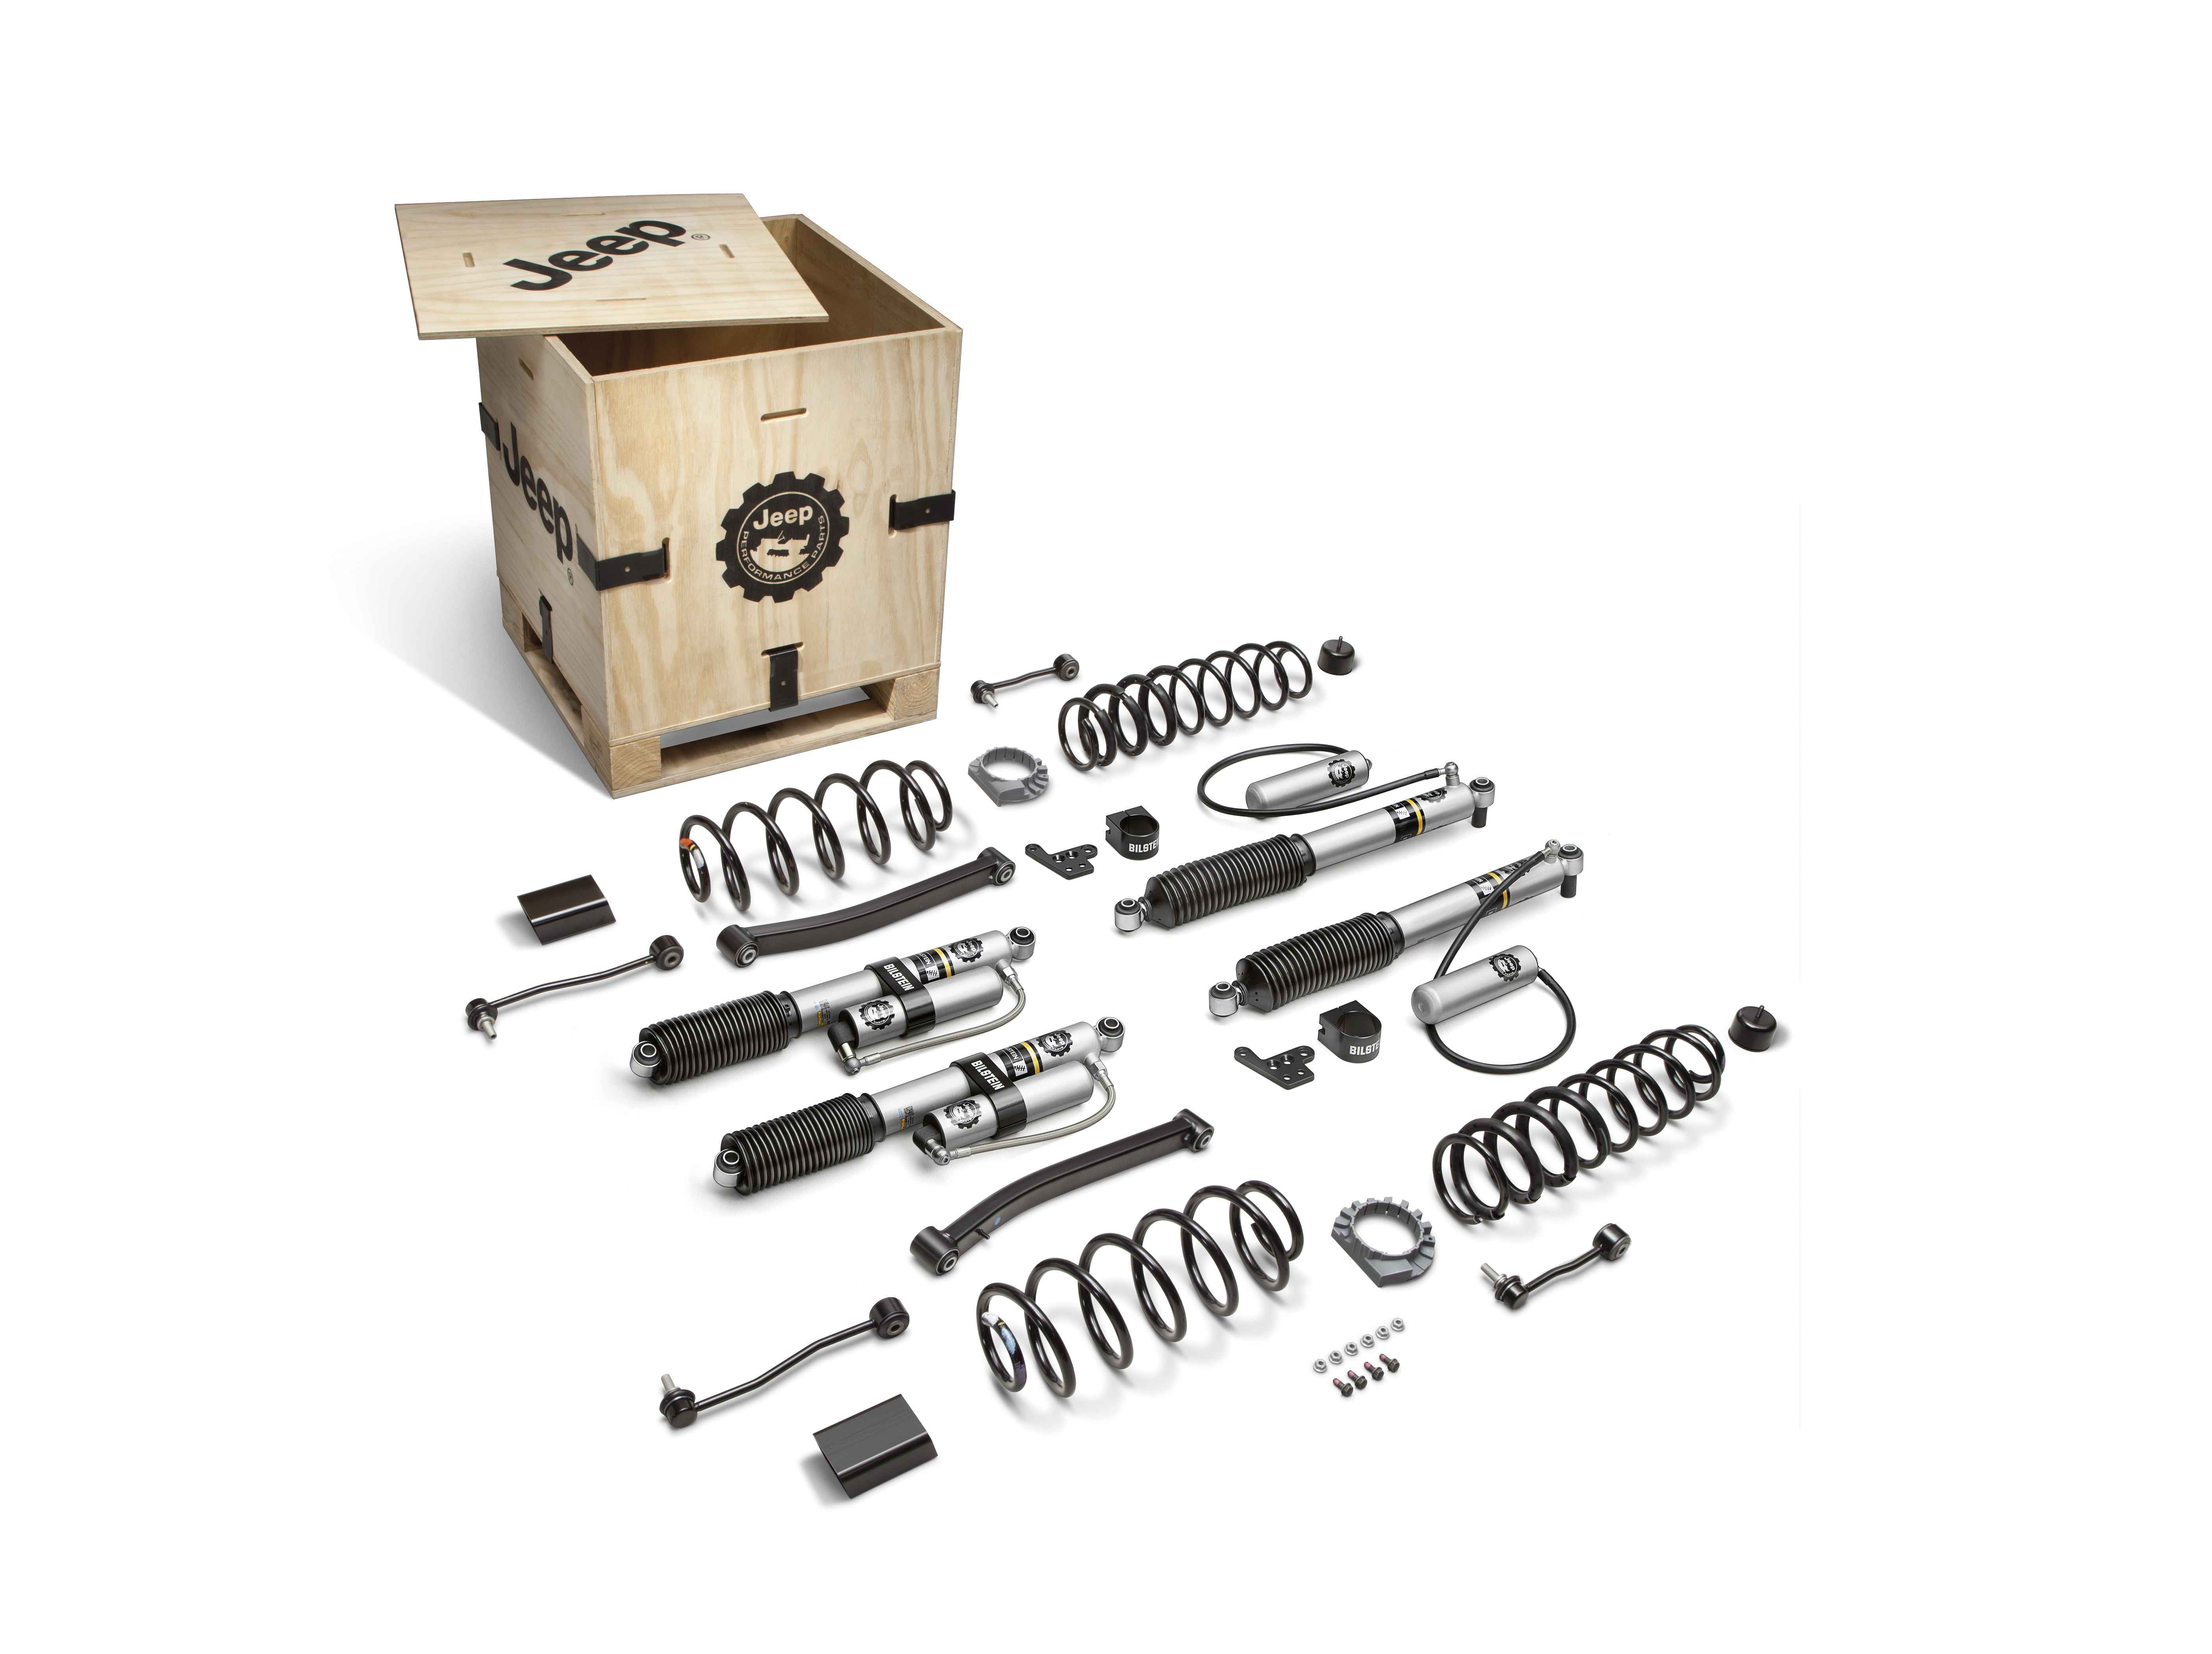 Jeep Performance Parts 2-inch Lift Kit with Bilstein Reservoir Shocks, 30L EcoDiesel Engine